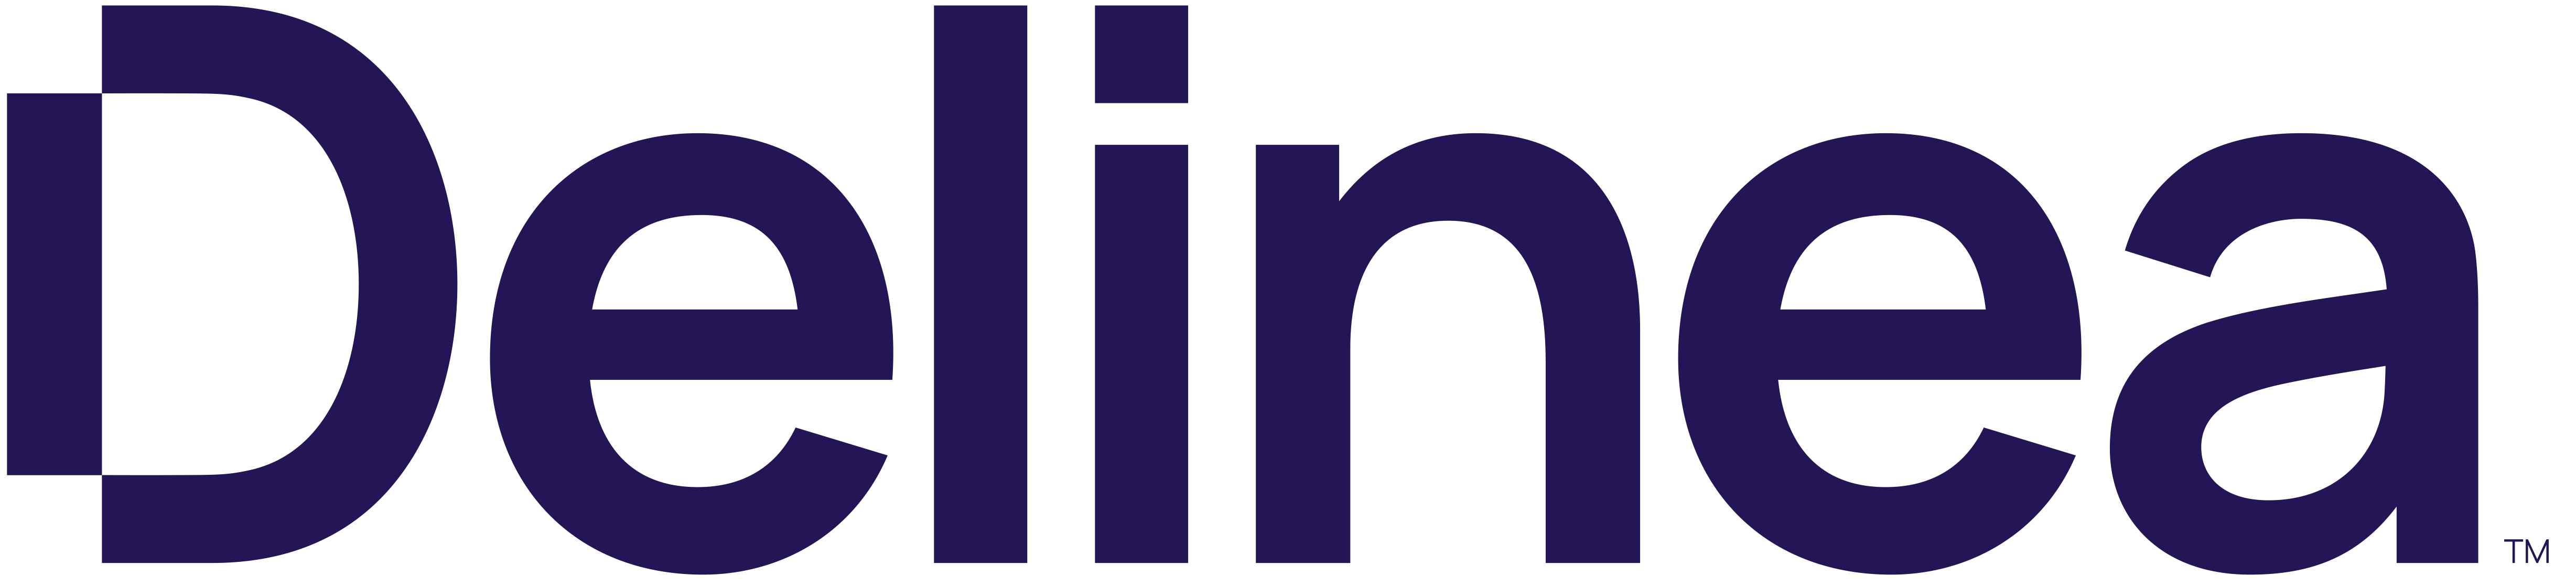 delinea-logo-wordmark-tm-rgb-purple.png